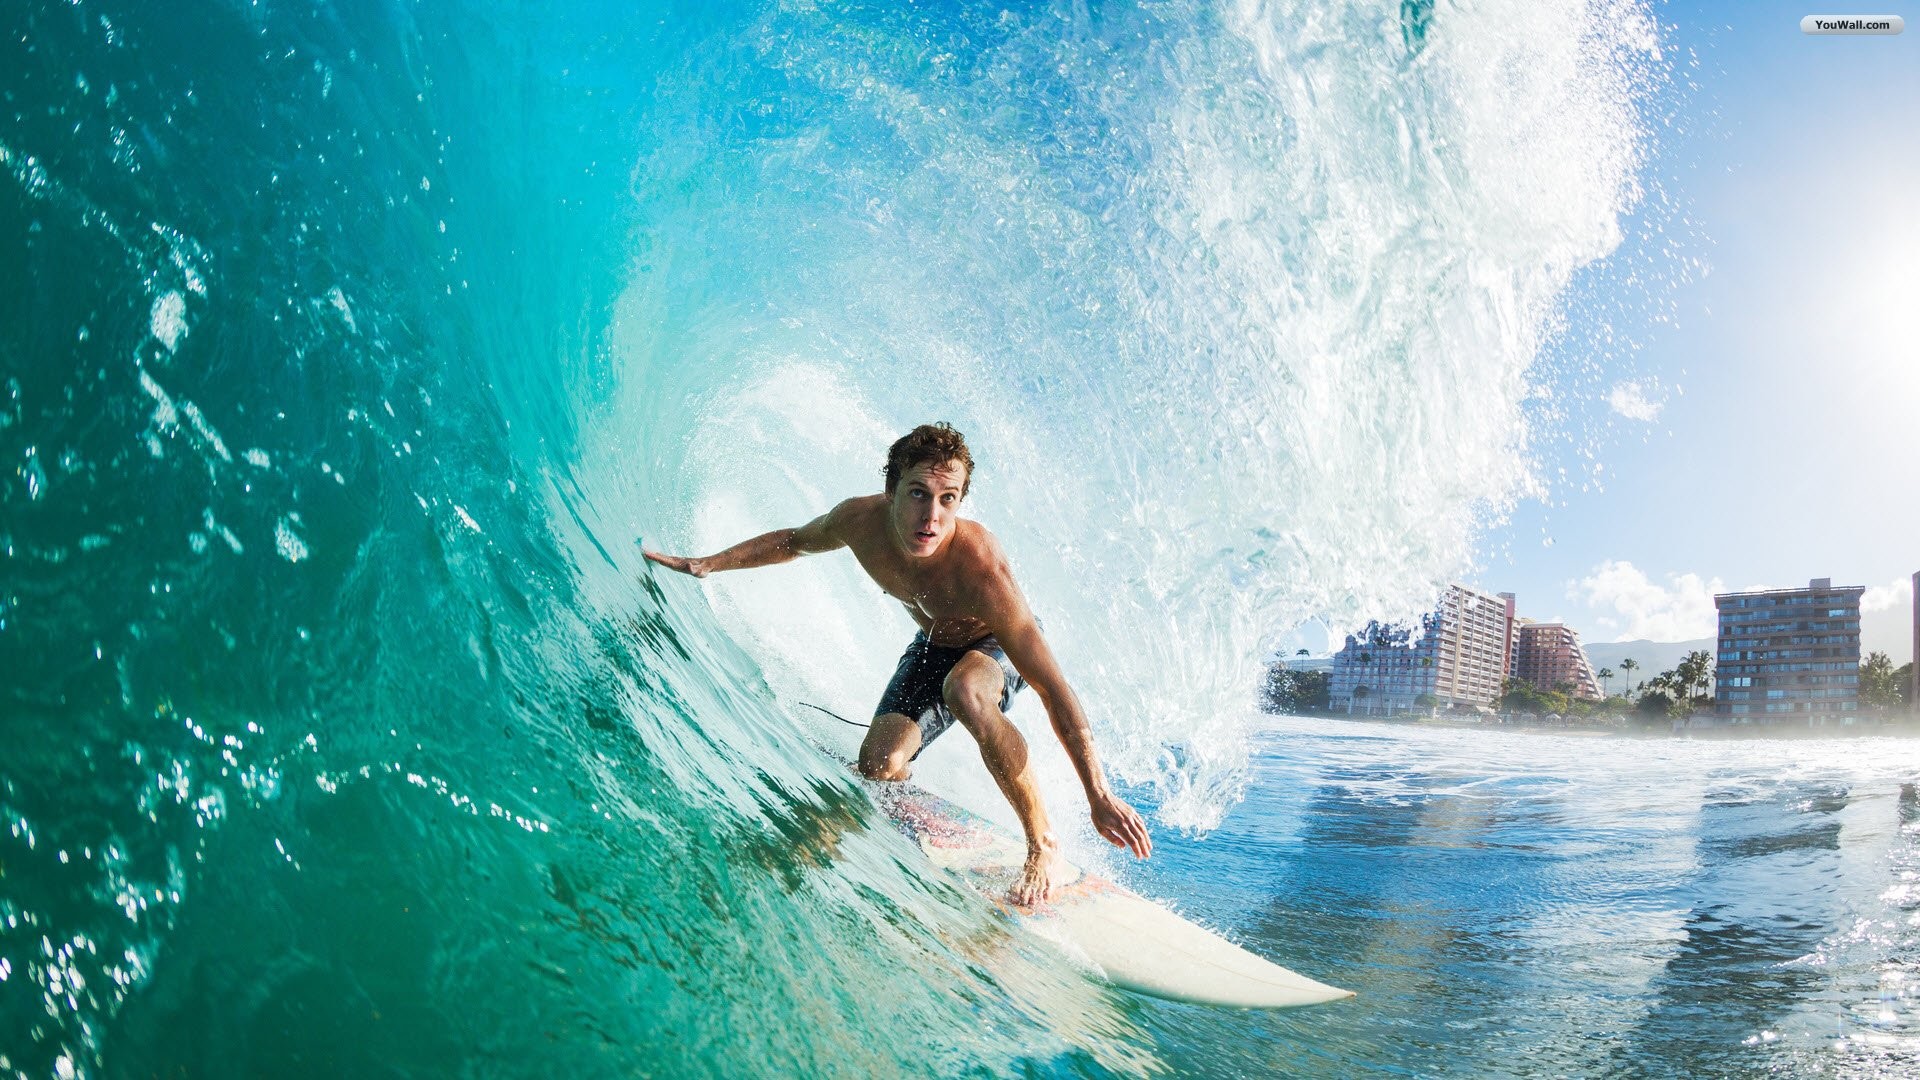 1920x1080 HD Surfing Surf Wave Wallpaper 1080p - HiReWallpapers 7595